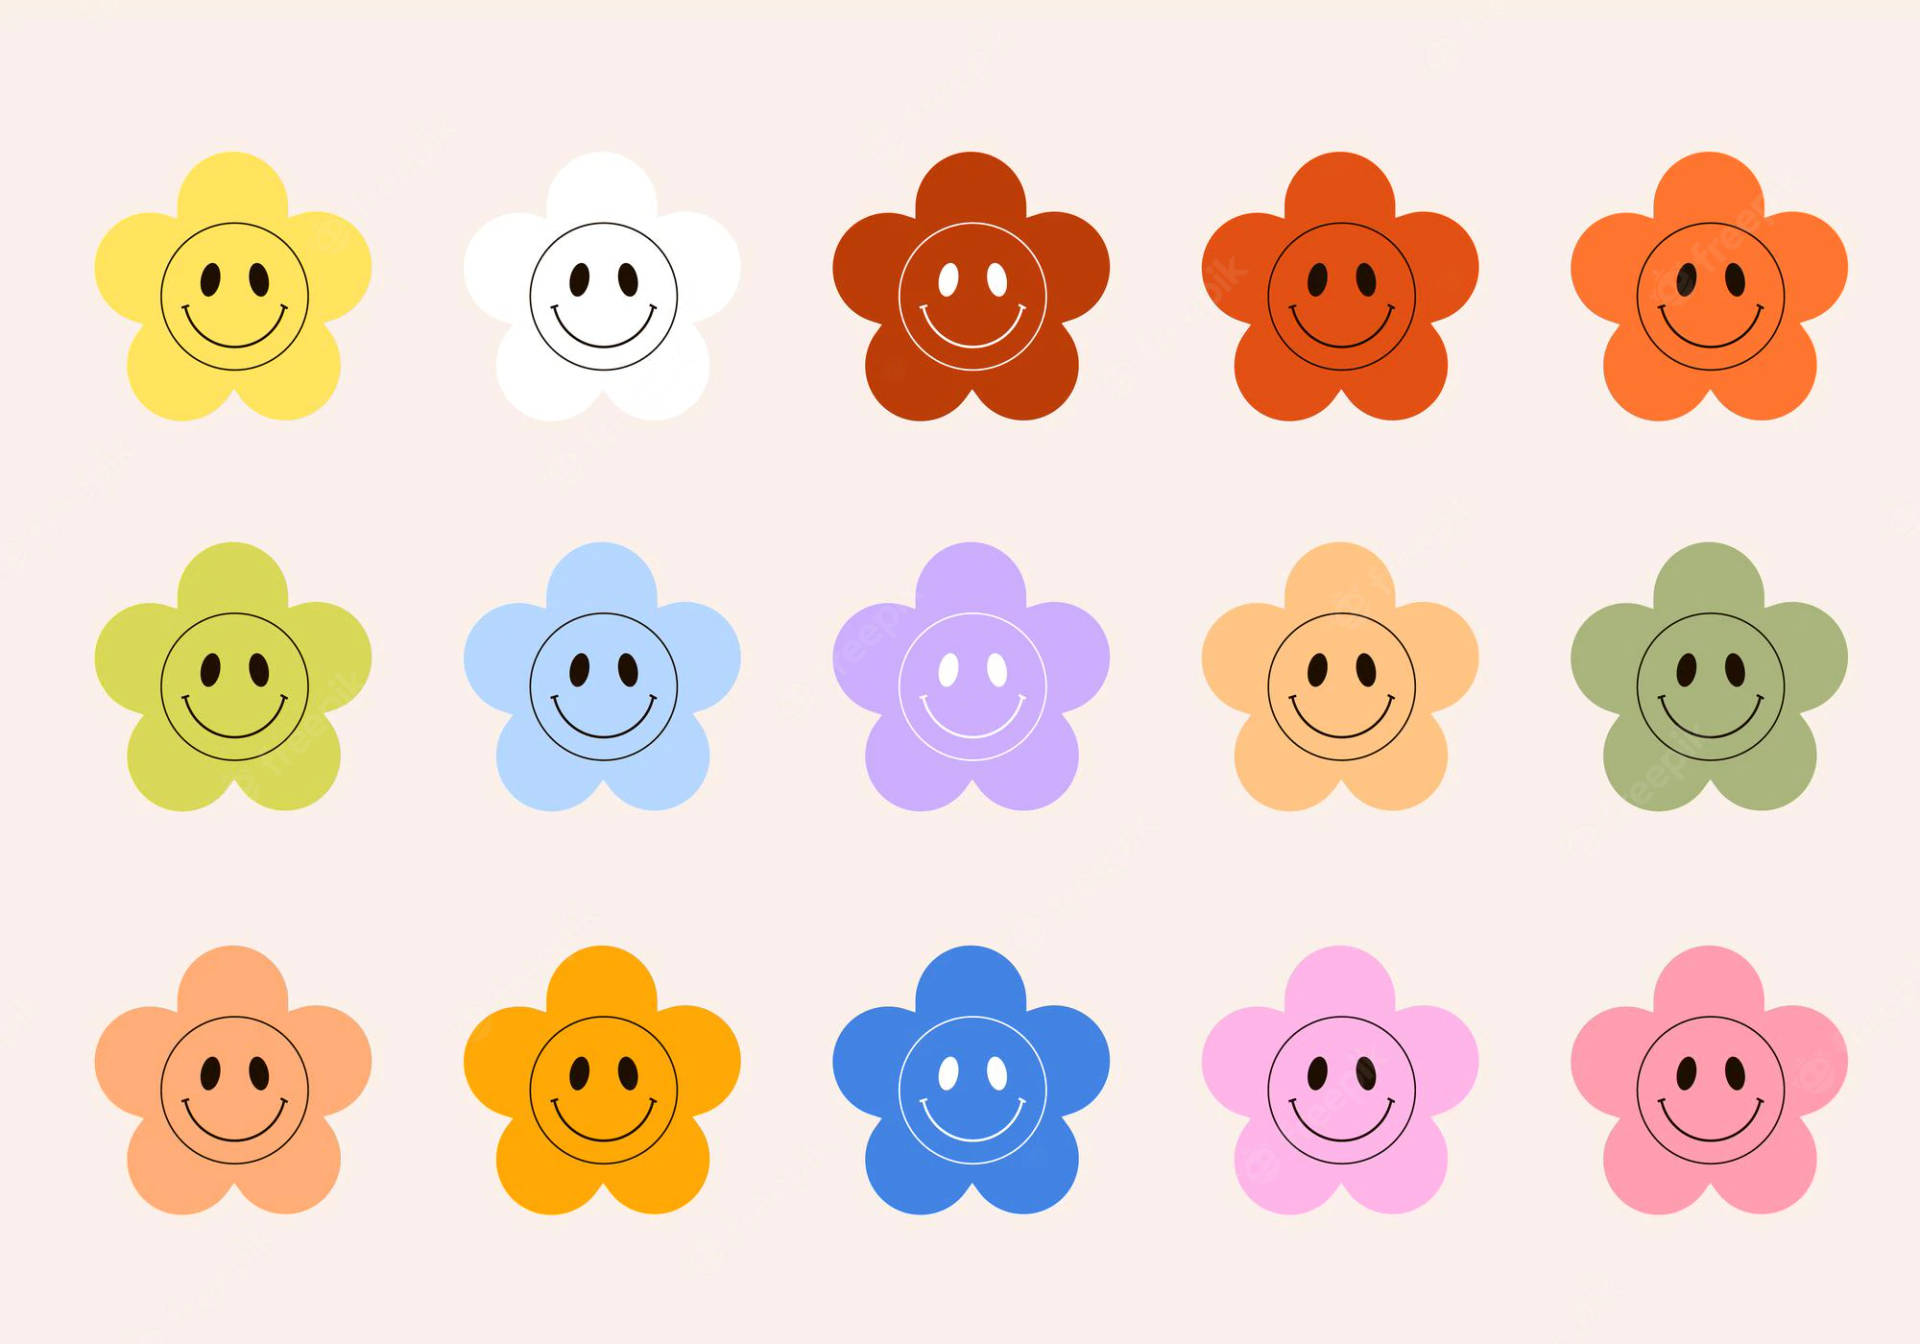 Flower Preppy Smiley Faces Wallpaper